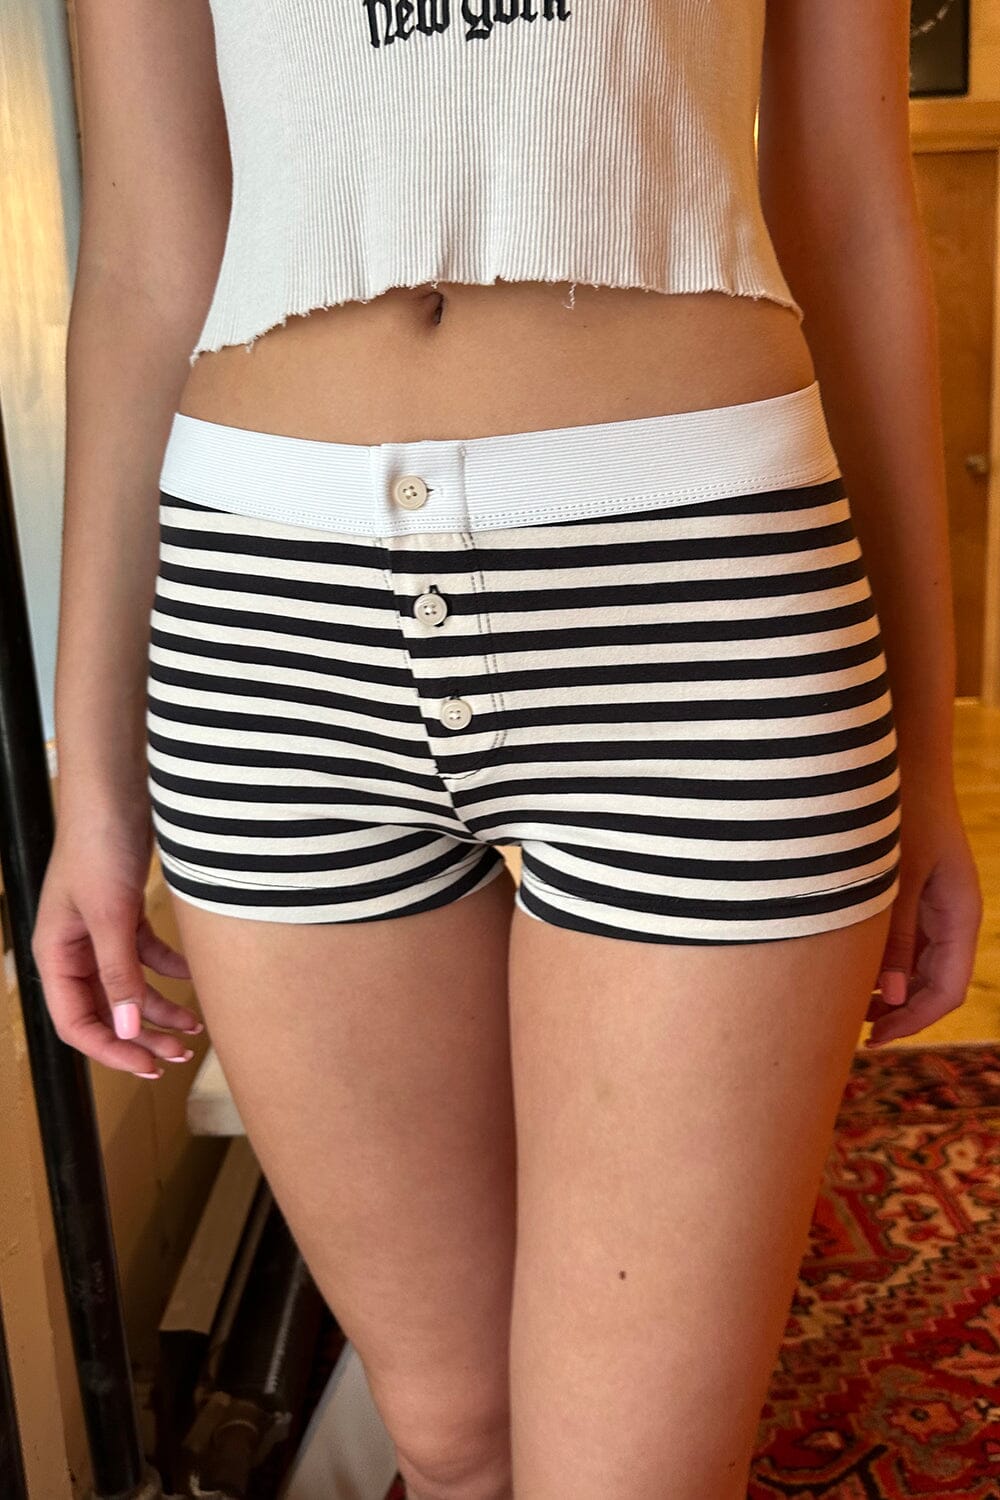 Brandy Melville please make pants for the short girliesss too😭😭 #bra, pants